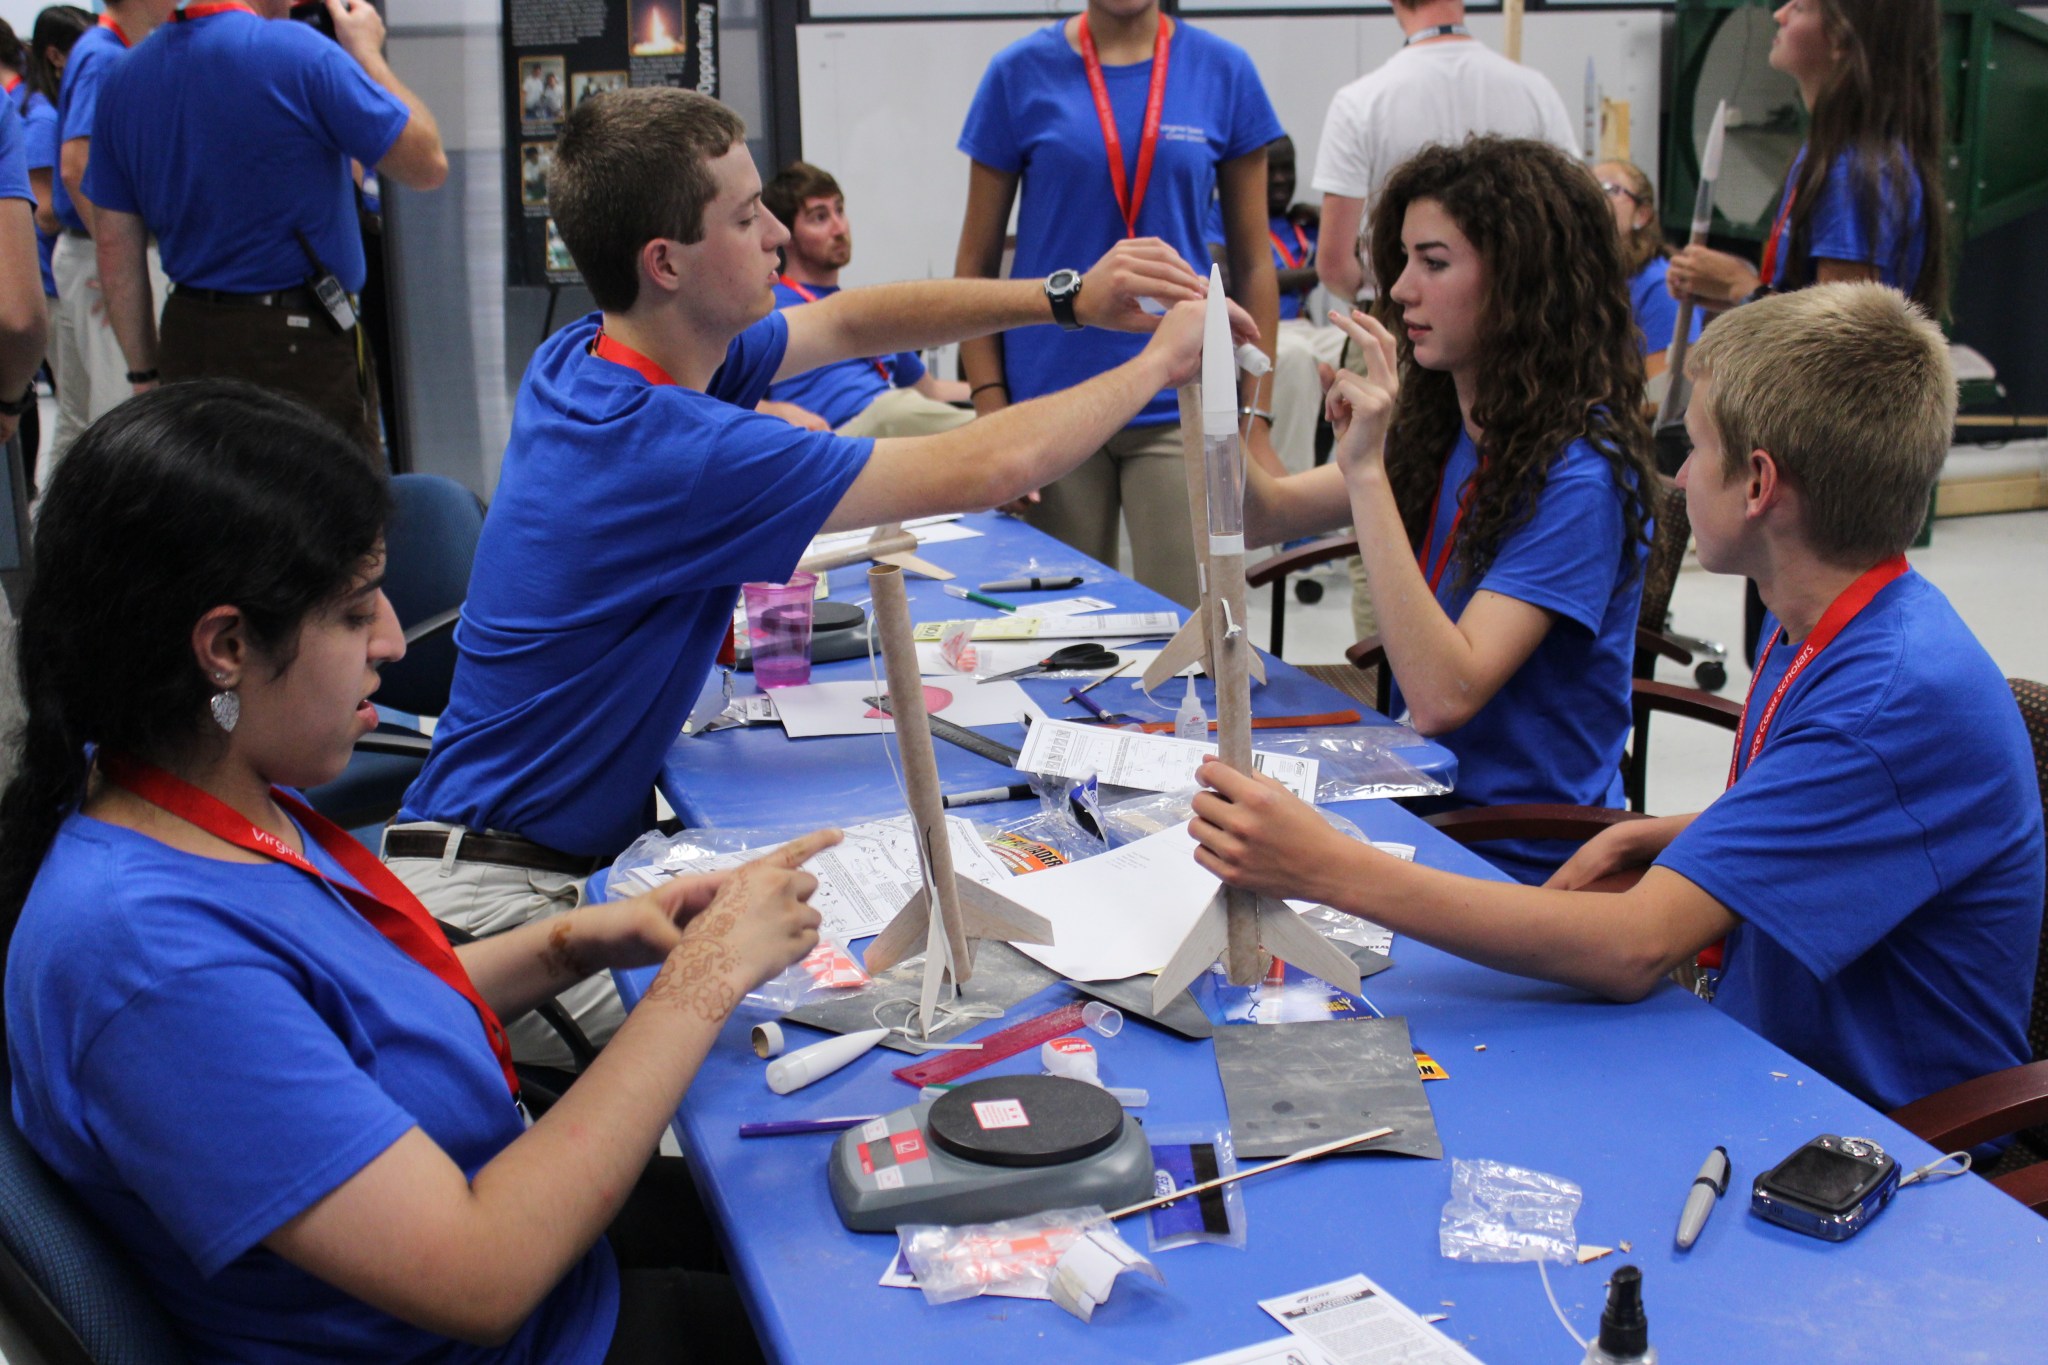 Students work together to build a model rocket